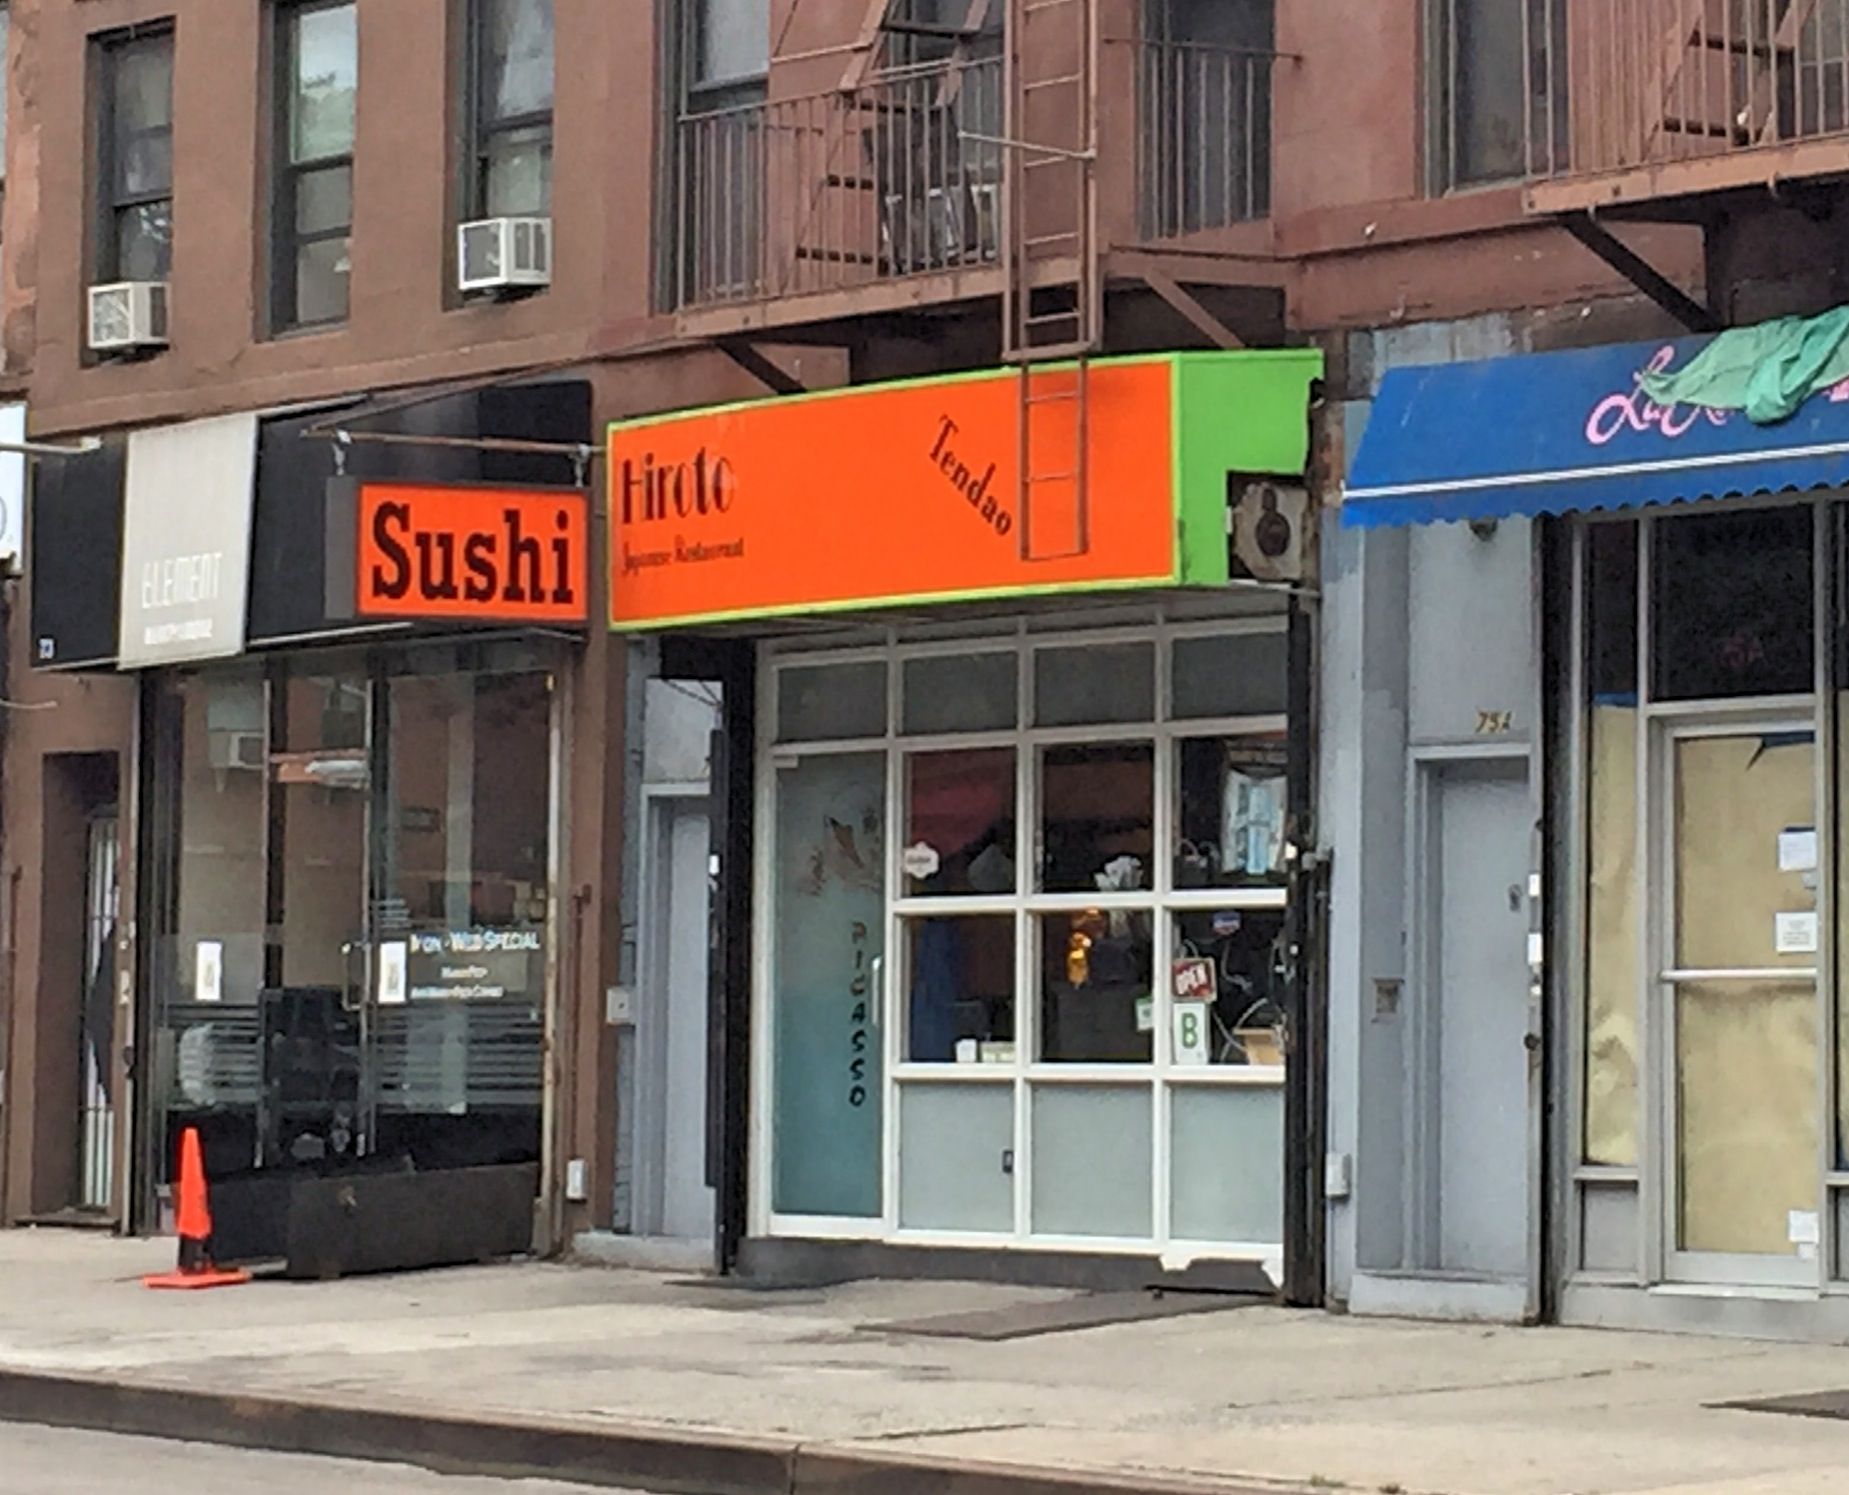 Shinju Sushi III On 5th Avenue Now Hiroto Japanese Restaurant